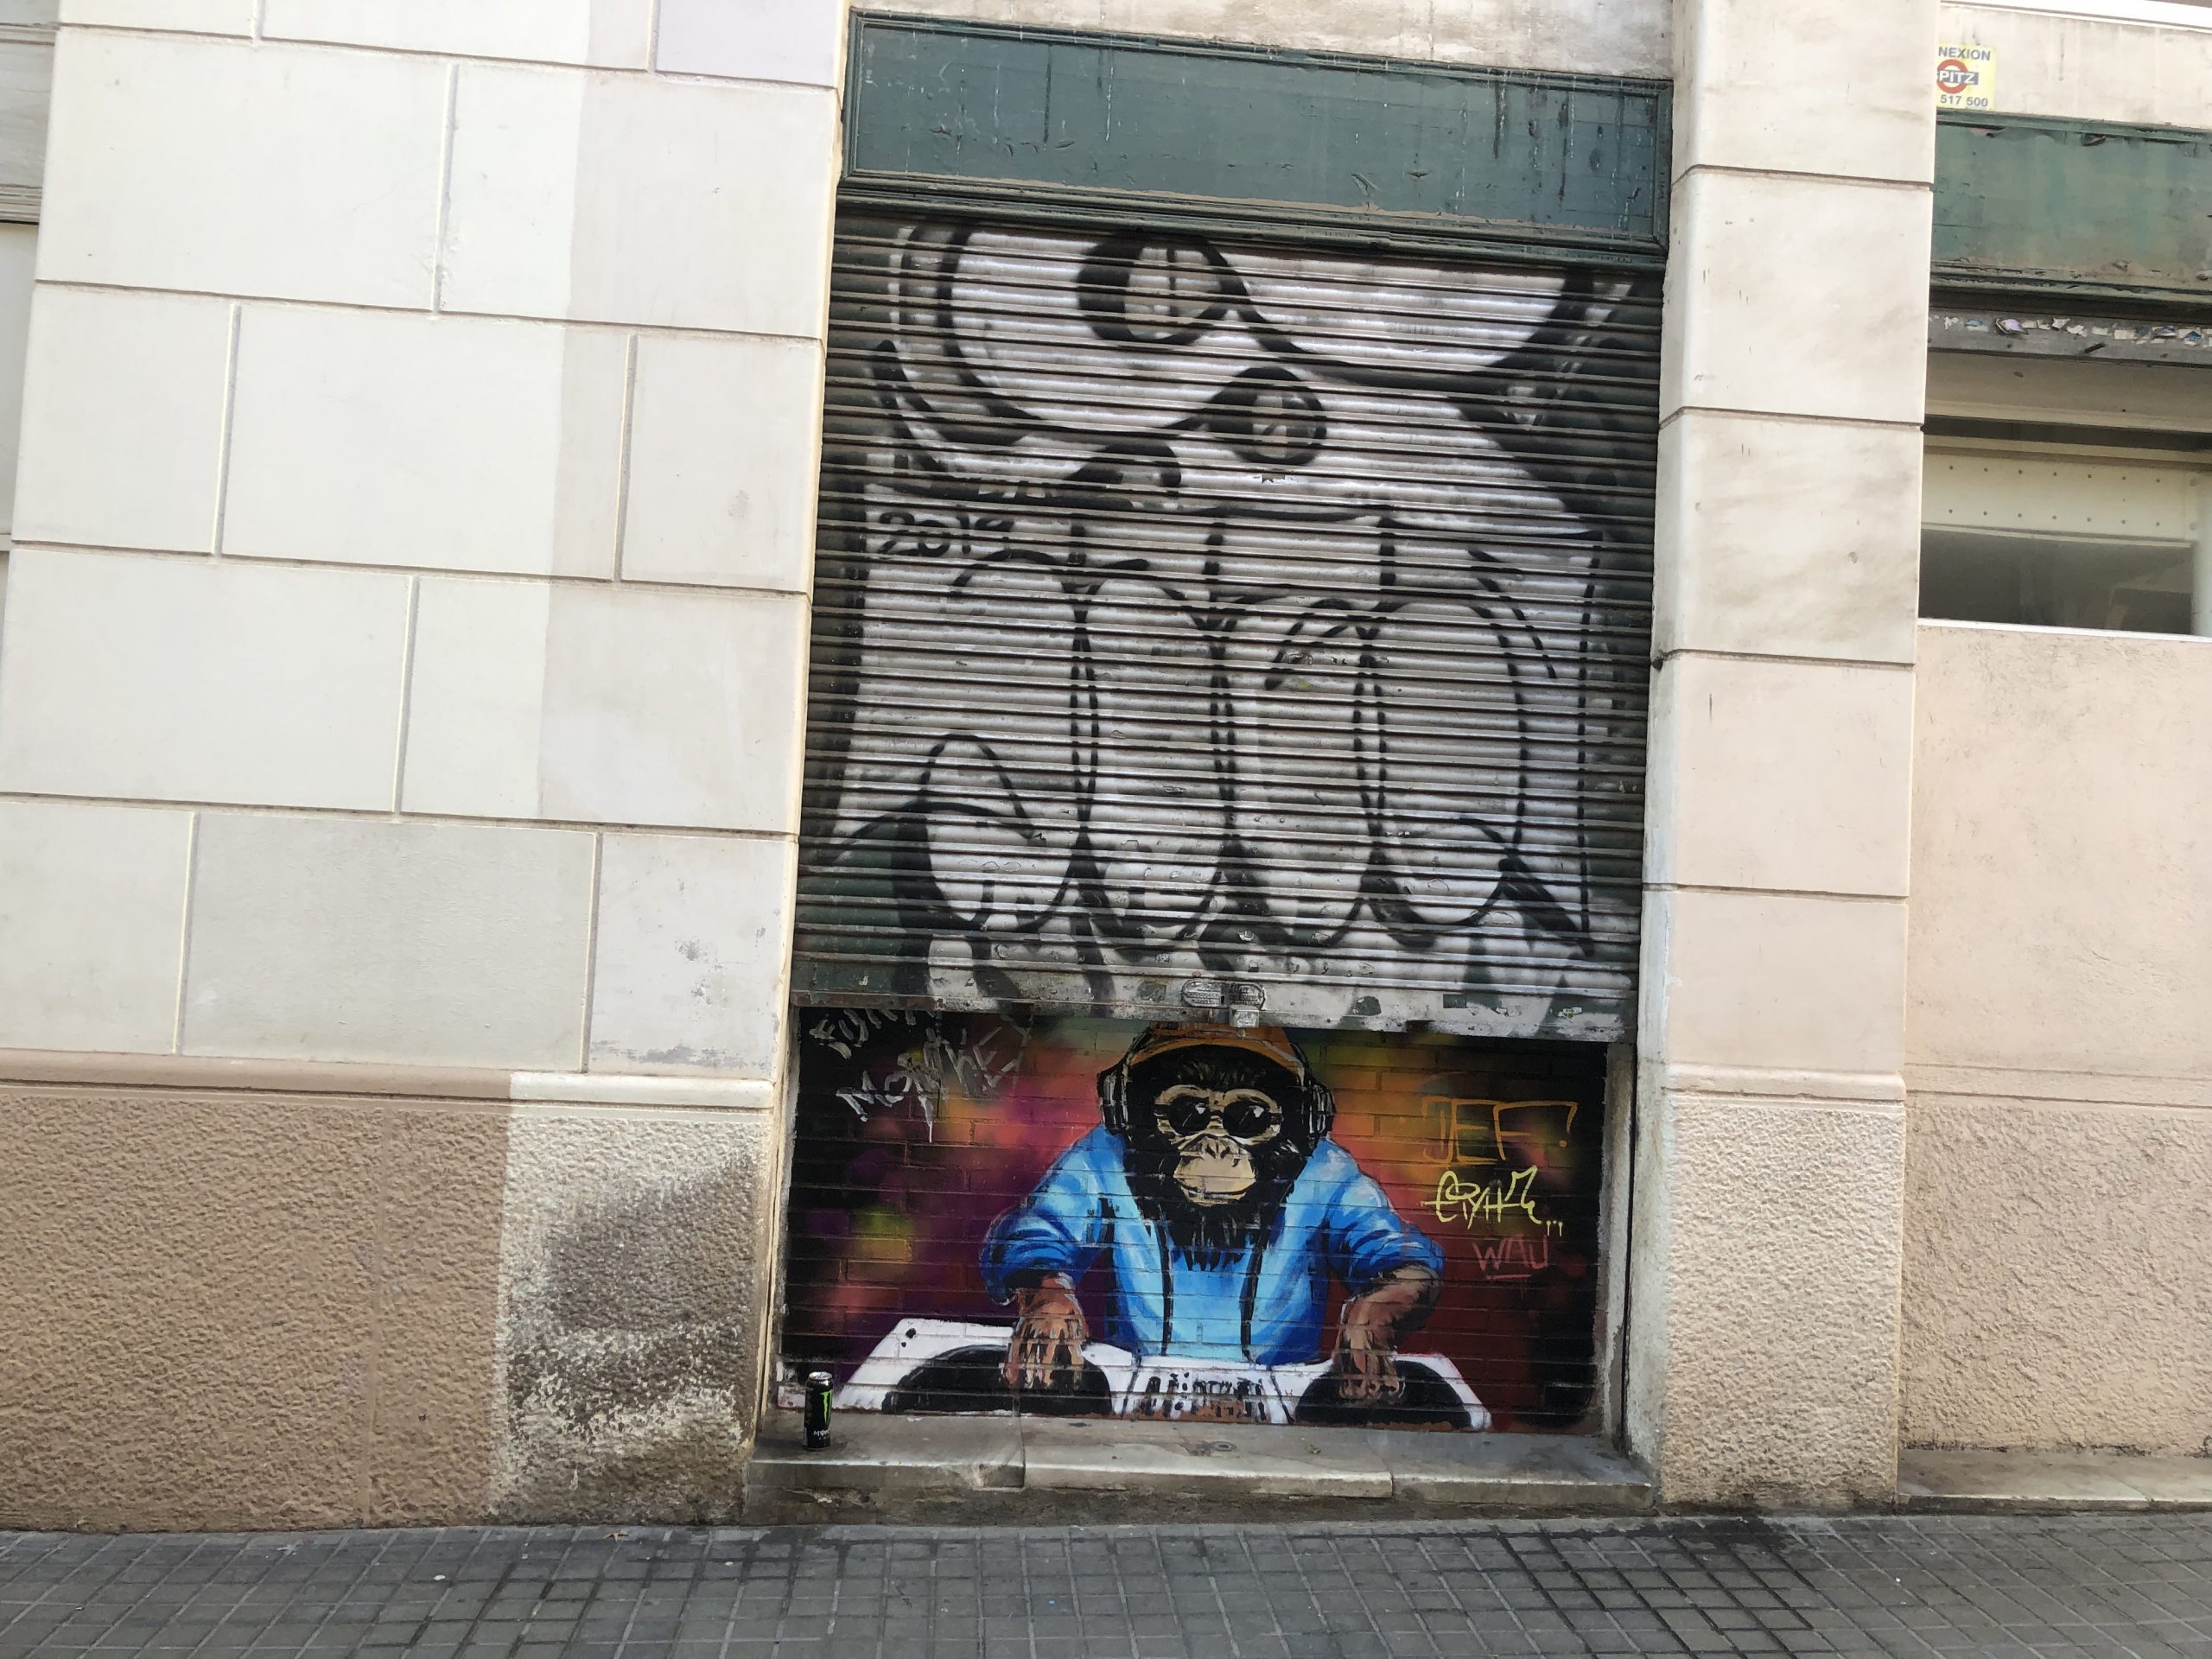 Graffiti art seen in an alley of Gràcia